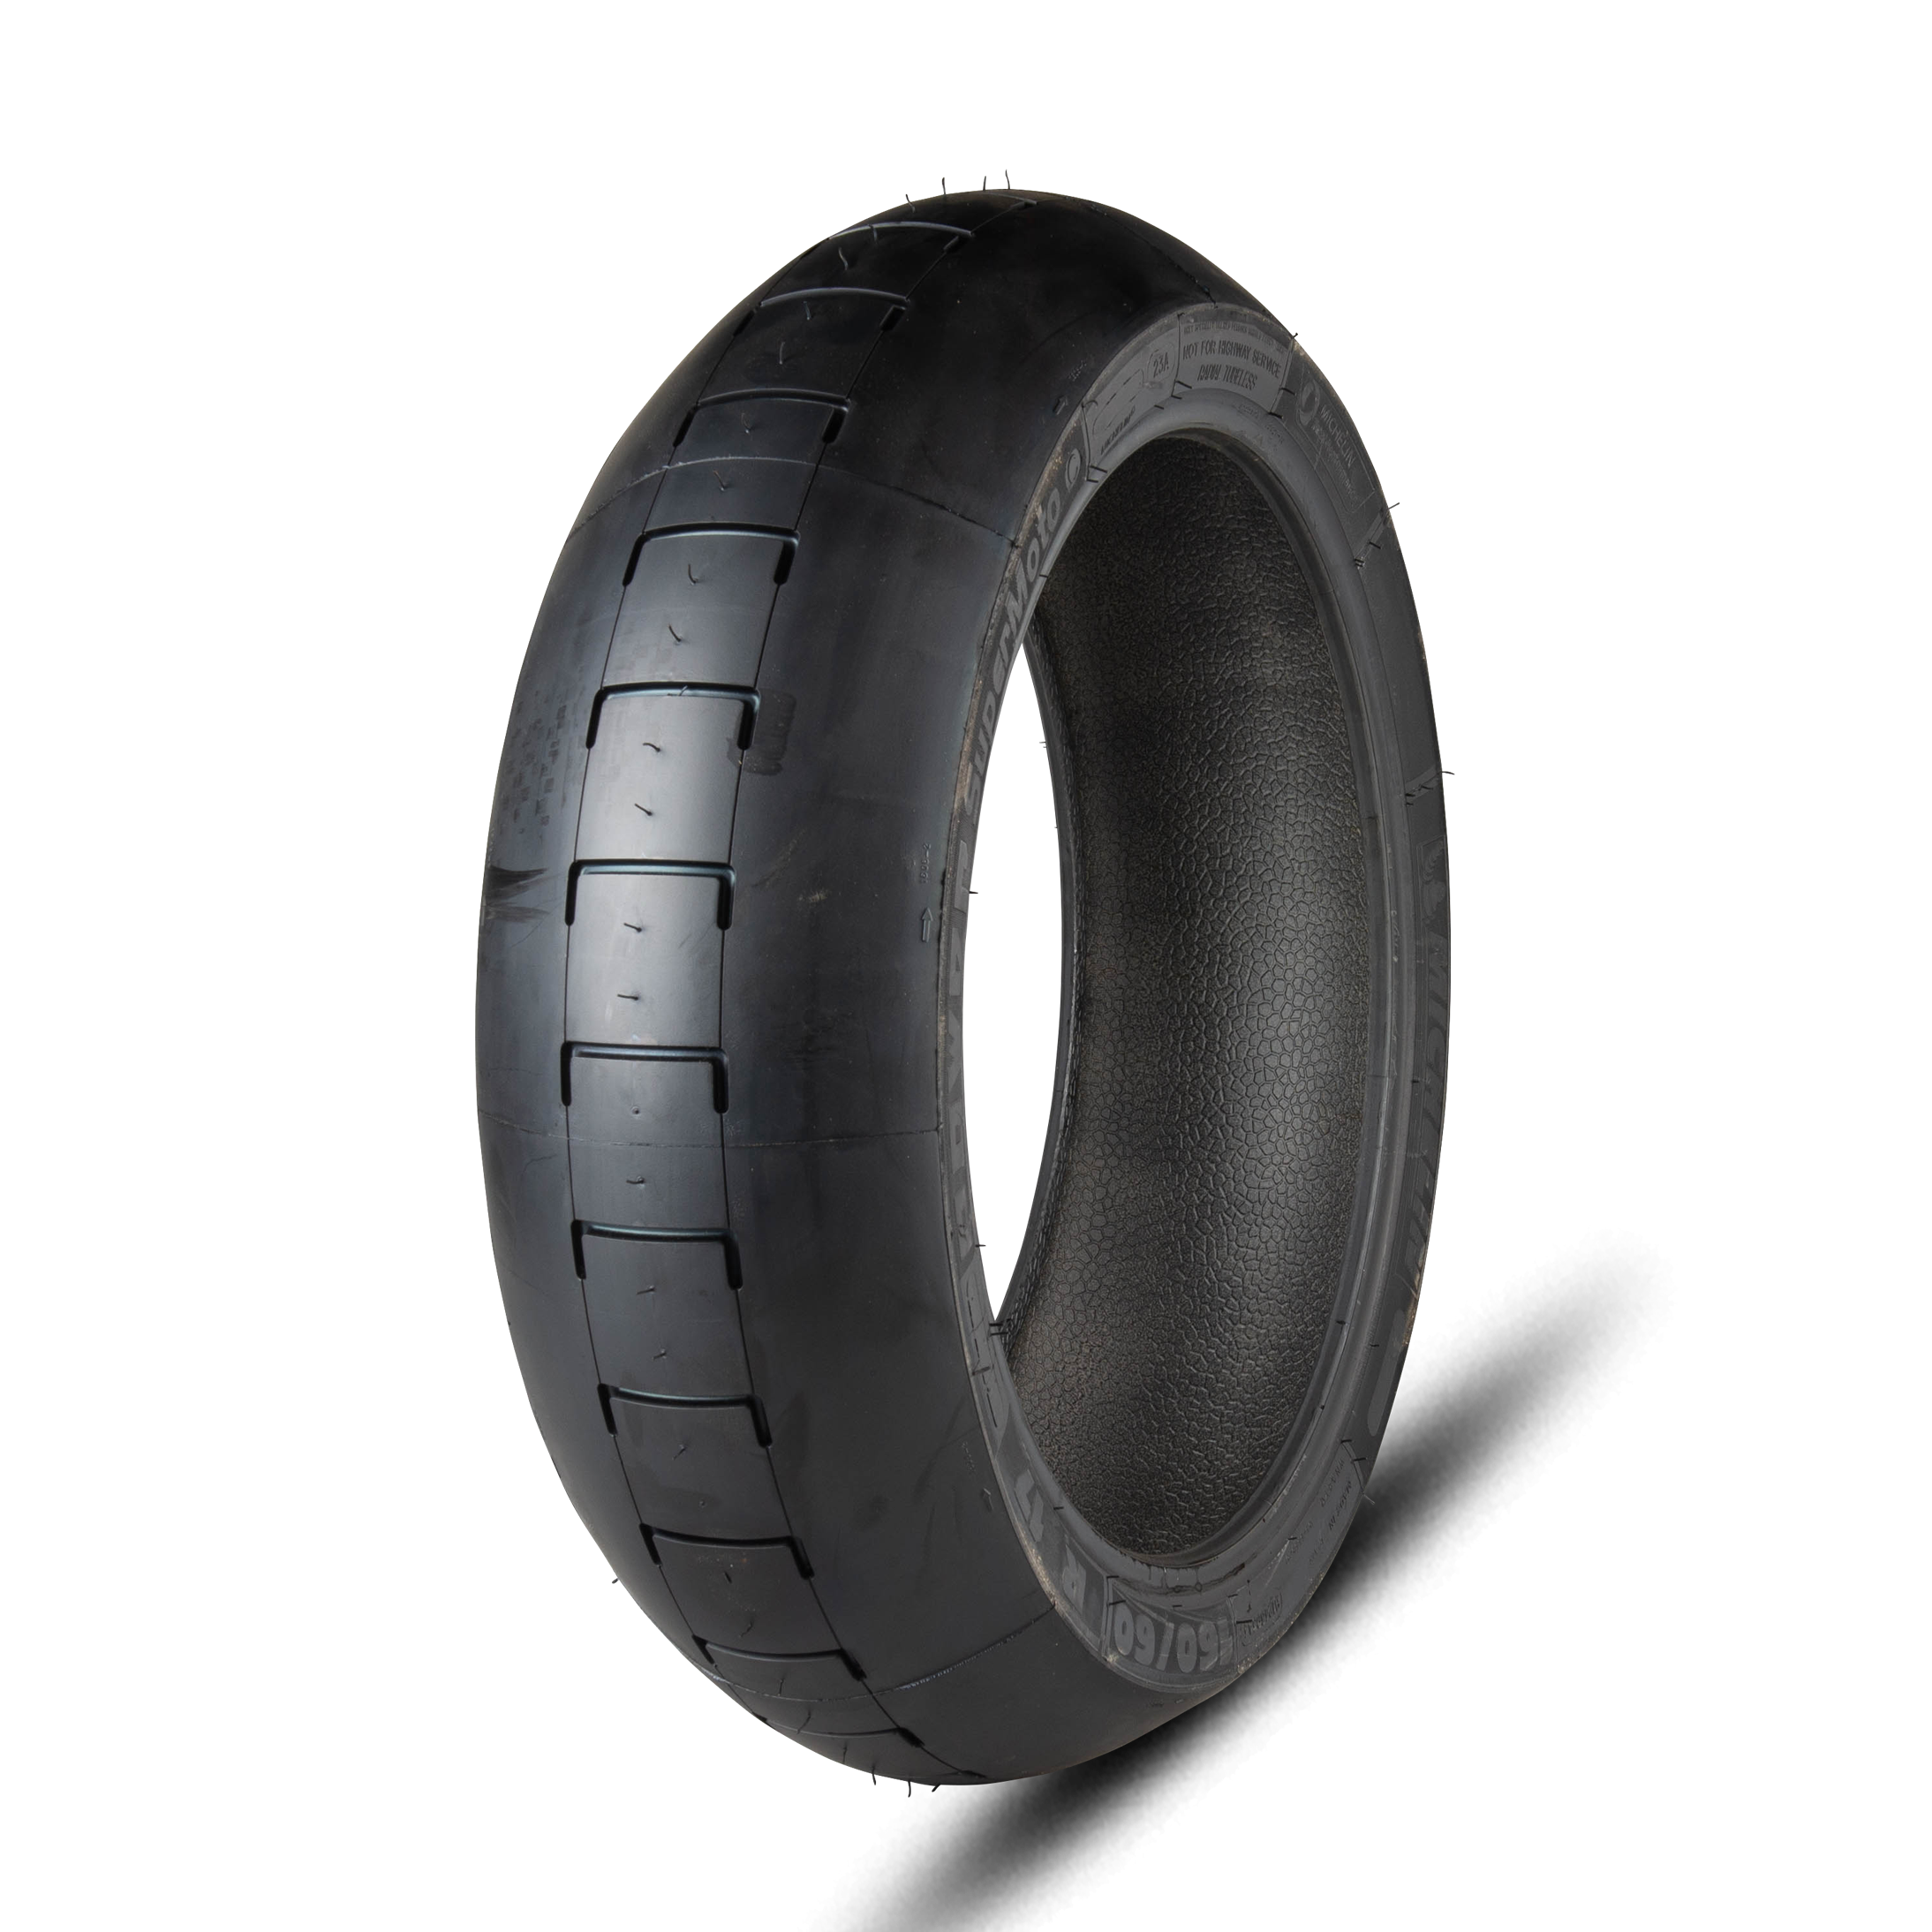 Michelin Power Super Moto Motard Rear Tire Slick 160/60-17 160 17  B SOFT NEW